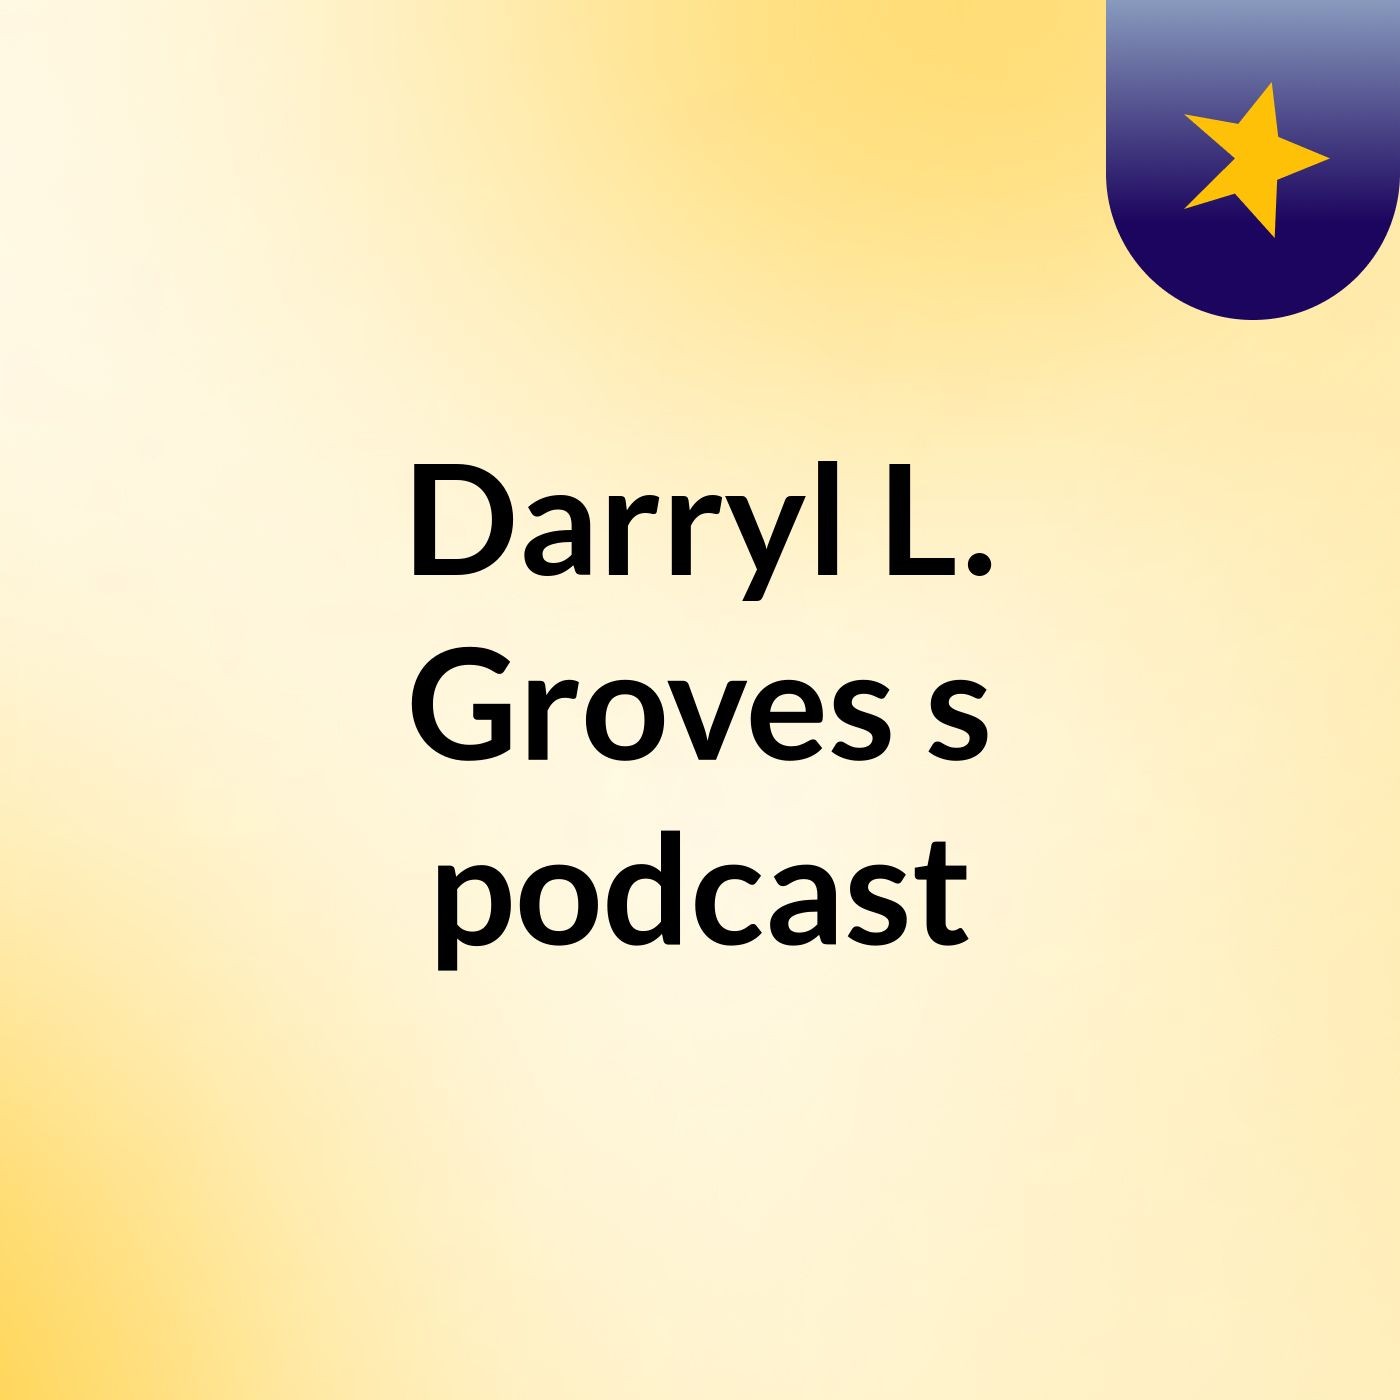 Episode 3 - Darryl L. Groves's podcast